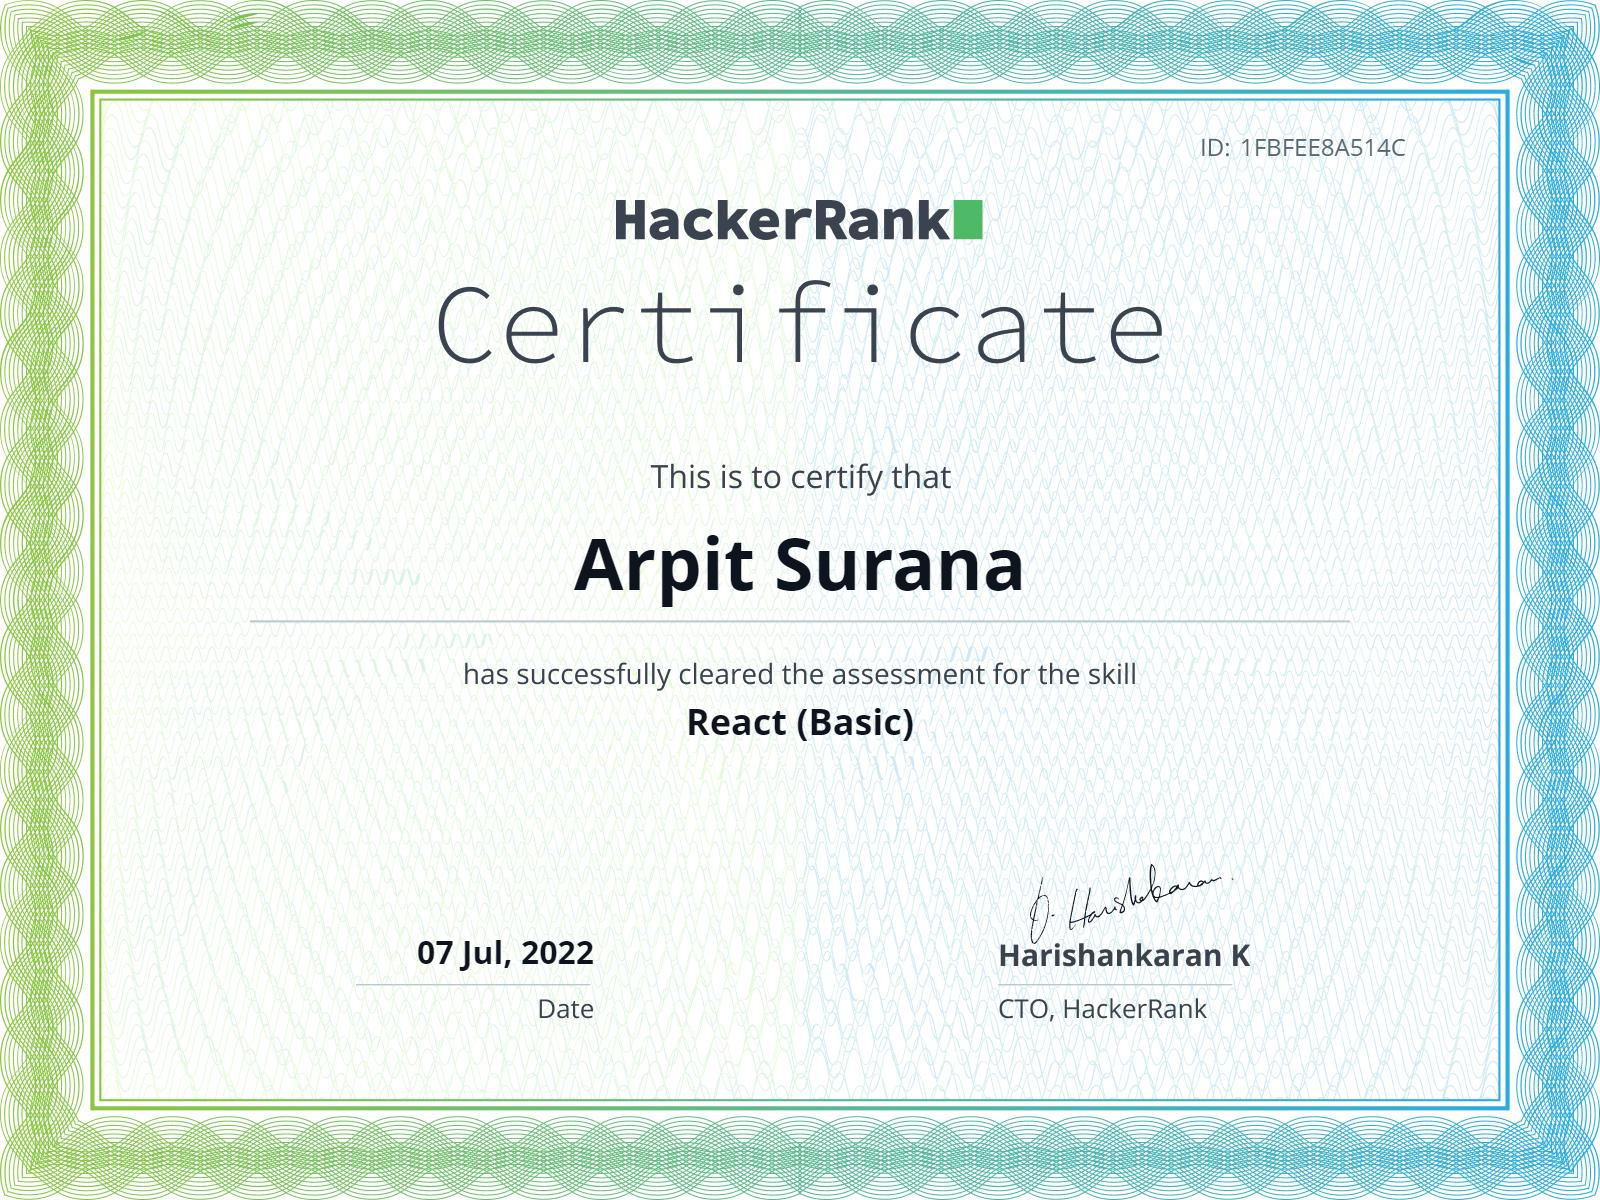 reactbasic-certificate